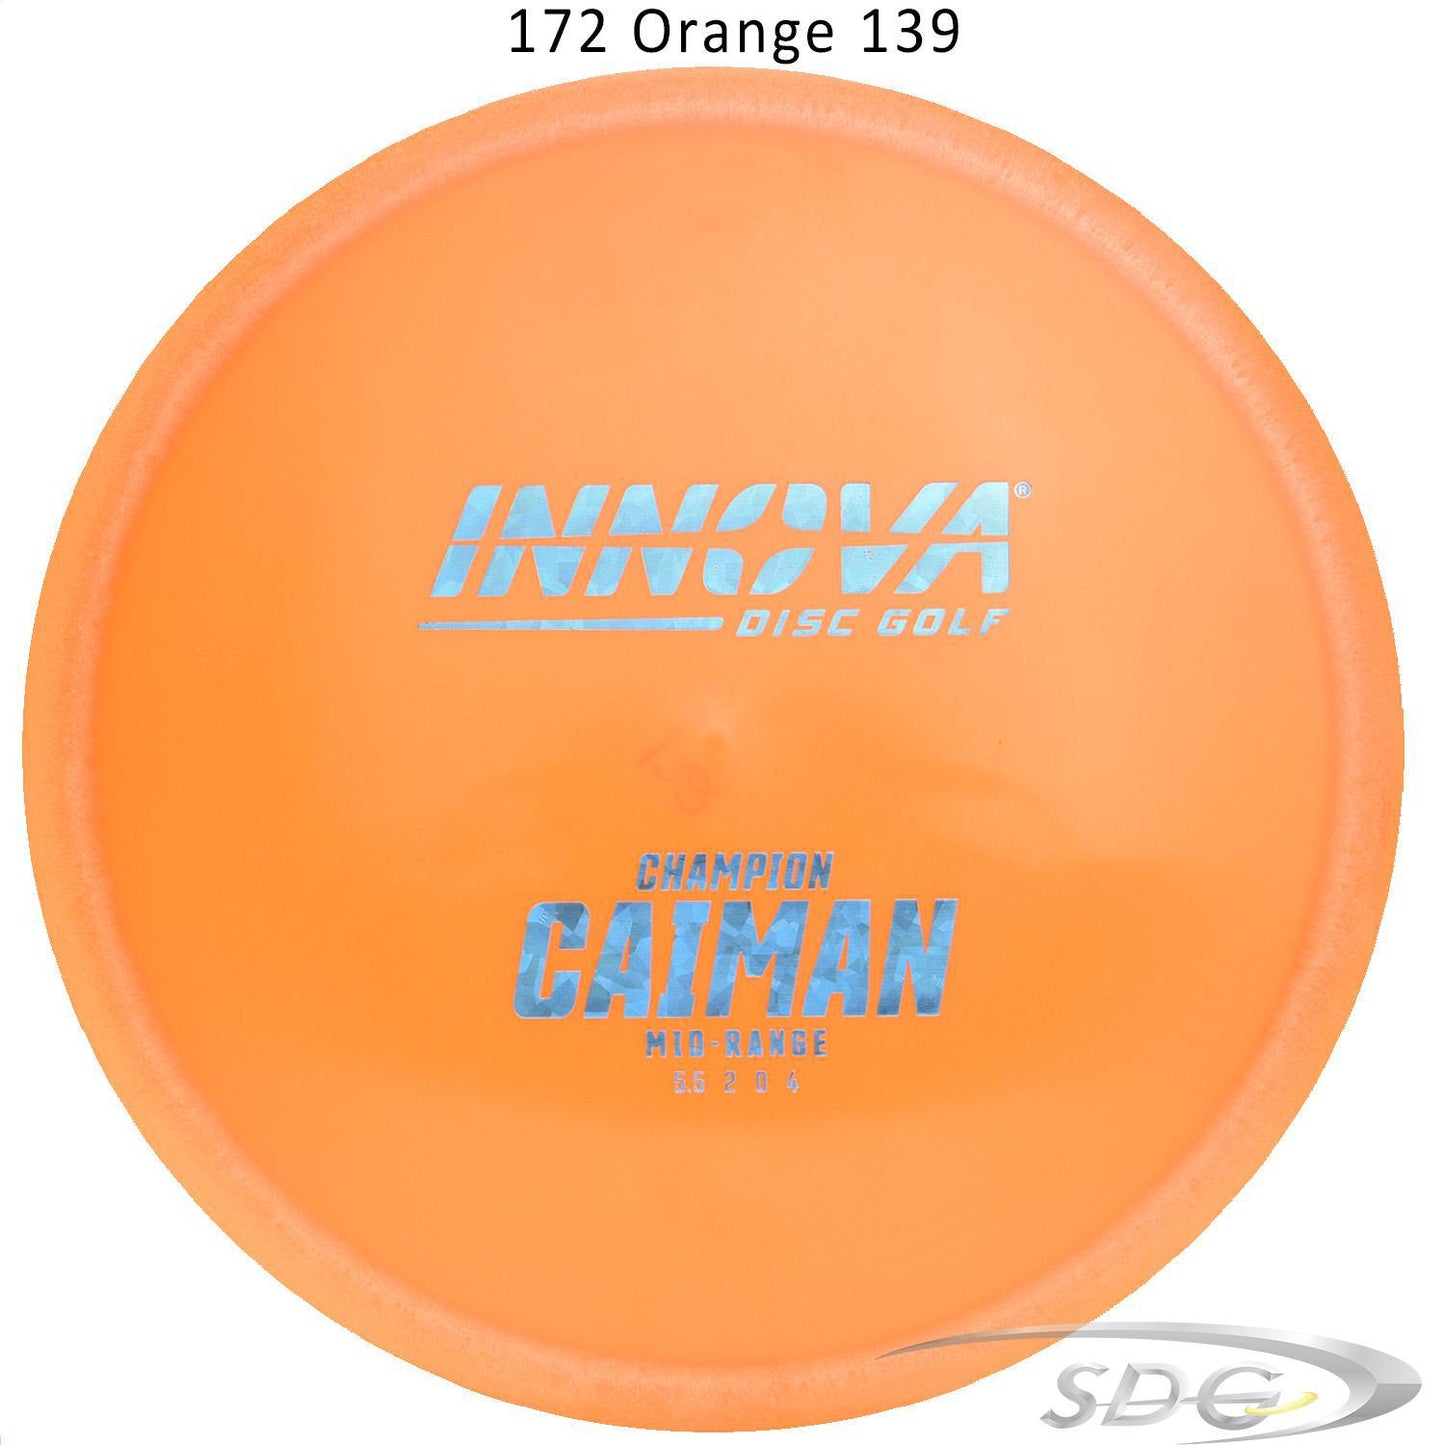 innova-champion-caiman-disc-golf-mid-range 172 Orange 139 